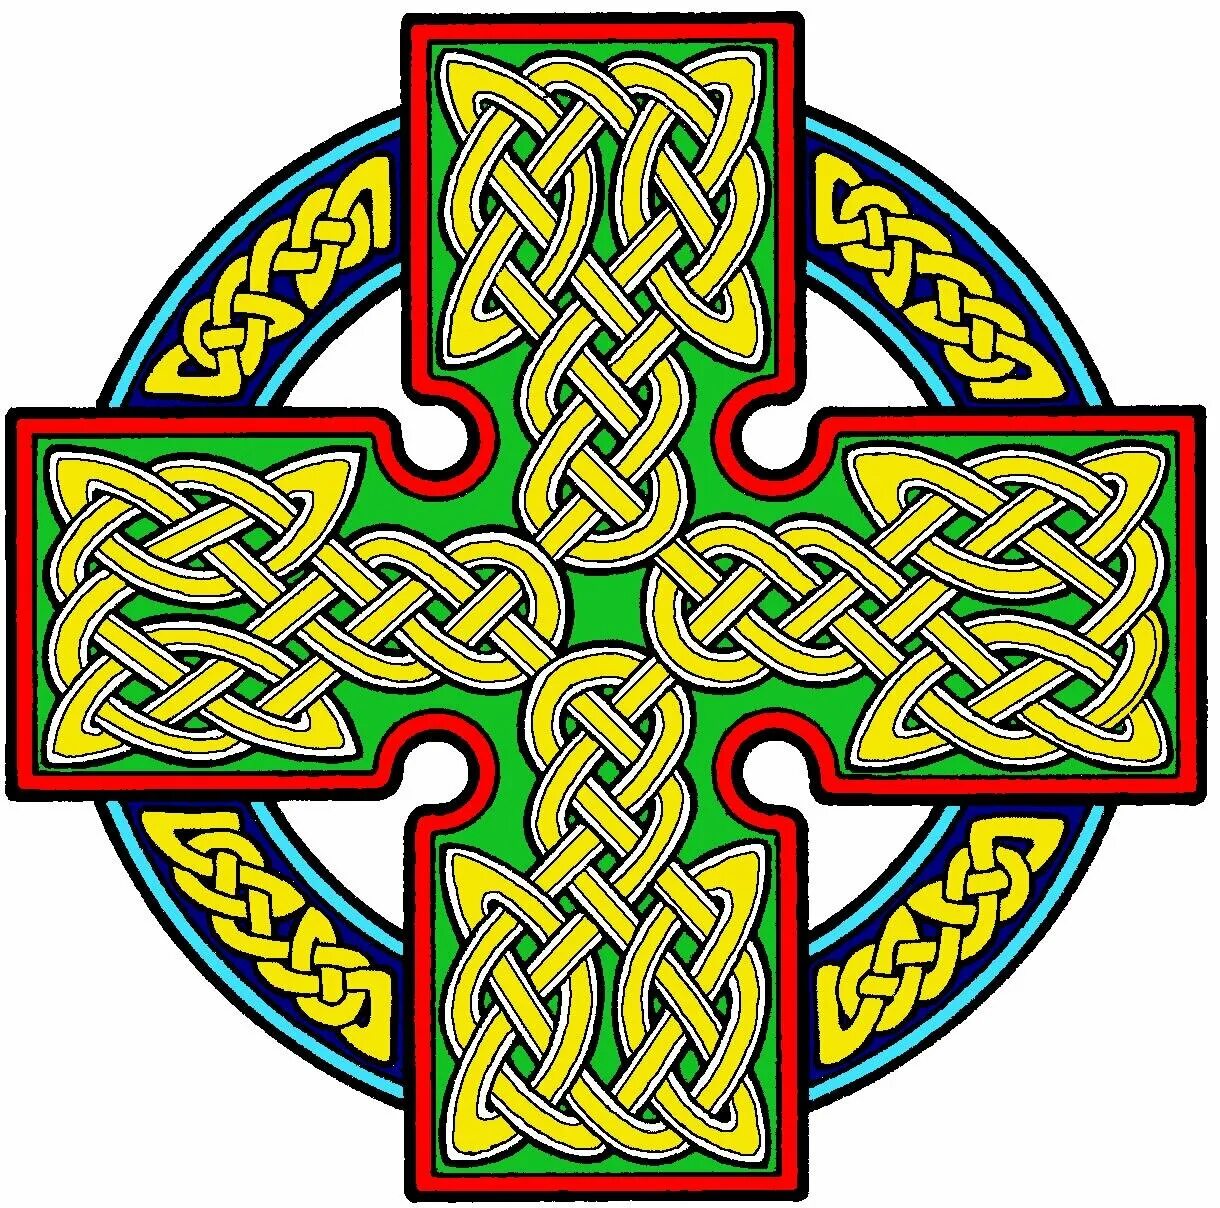 Равносторонний крест. Кельтский крест равносторонний. Кельтский крест Северная Ирландия символ. Славянские символы Кельтский крест. Кельтский крест ультраправых.